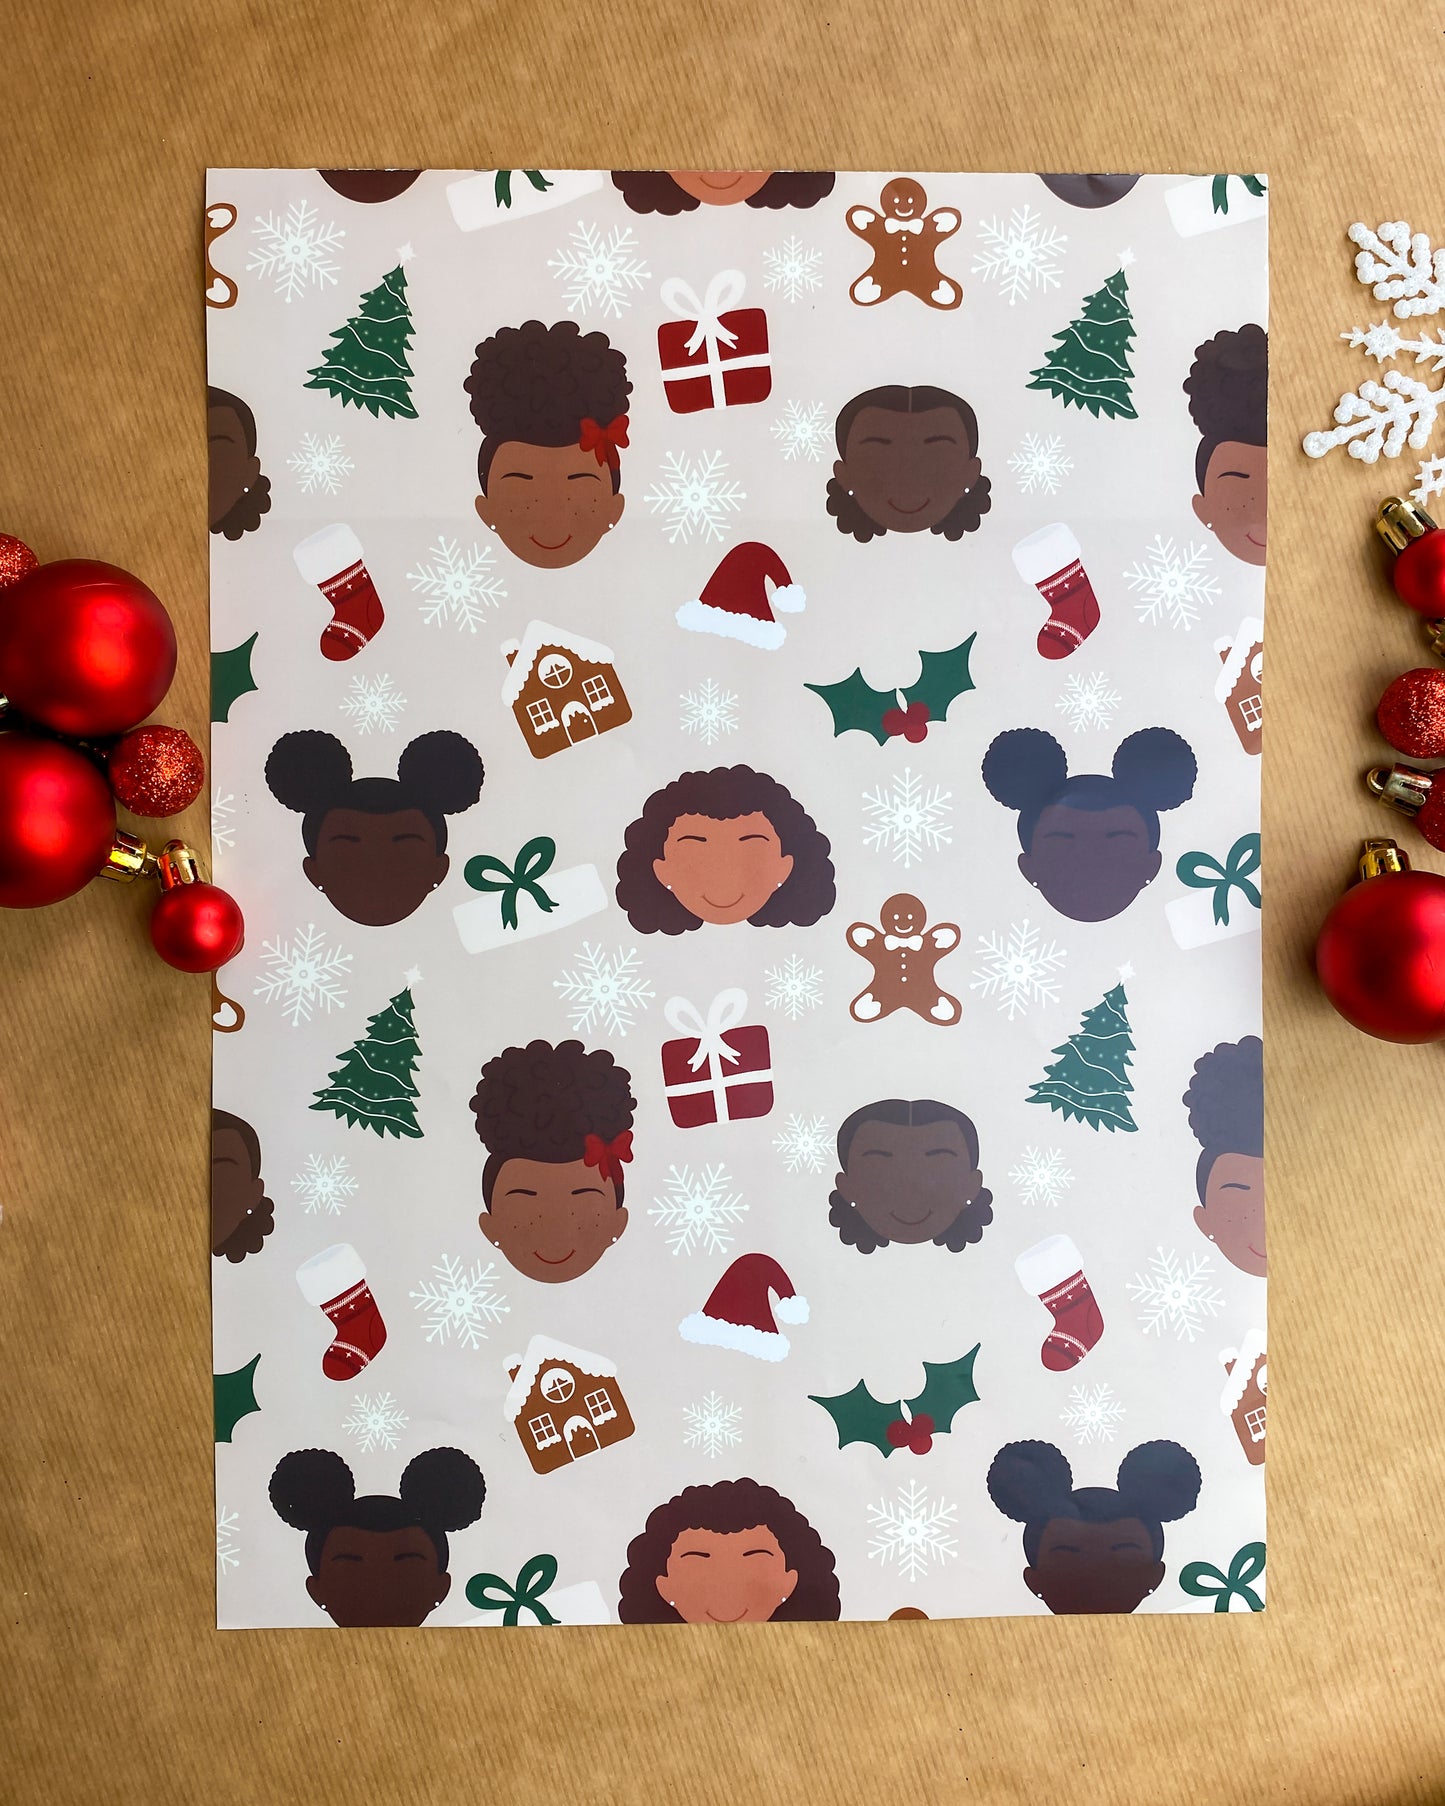 Black Girl Kids Christmas Ethnic Mixed Race Children Wrapping Paper Gift Wrap Boys & Girls Boy little Girl